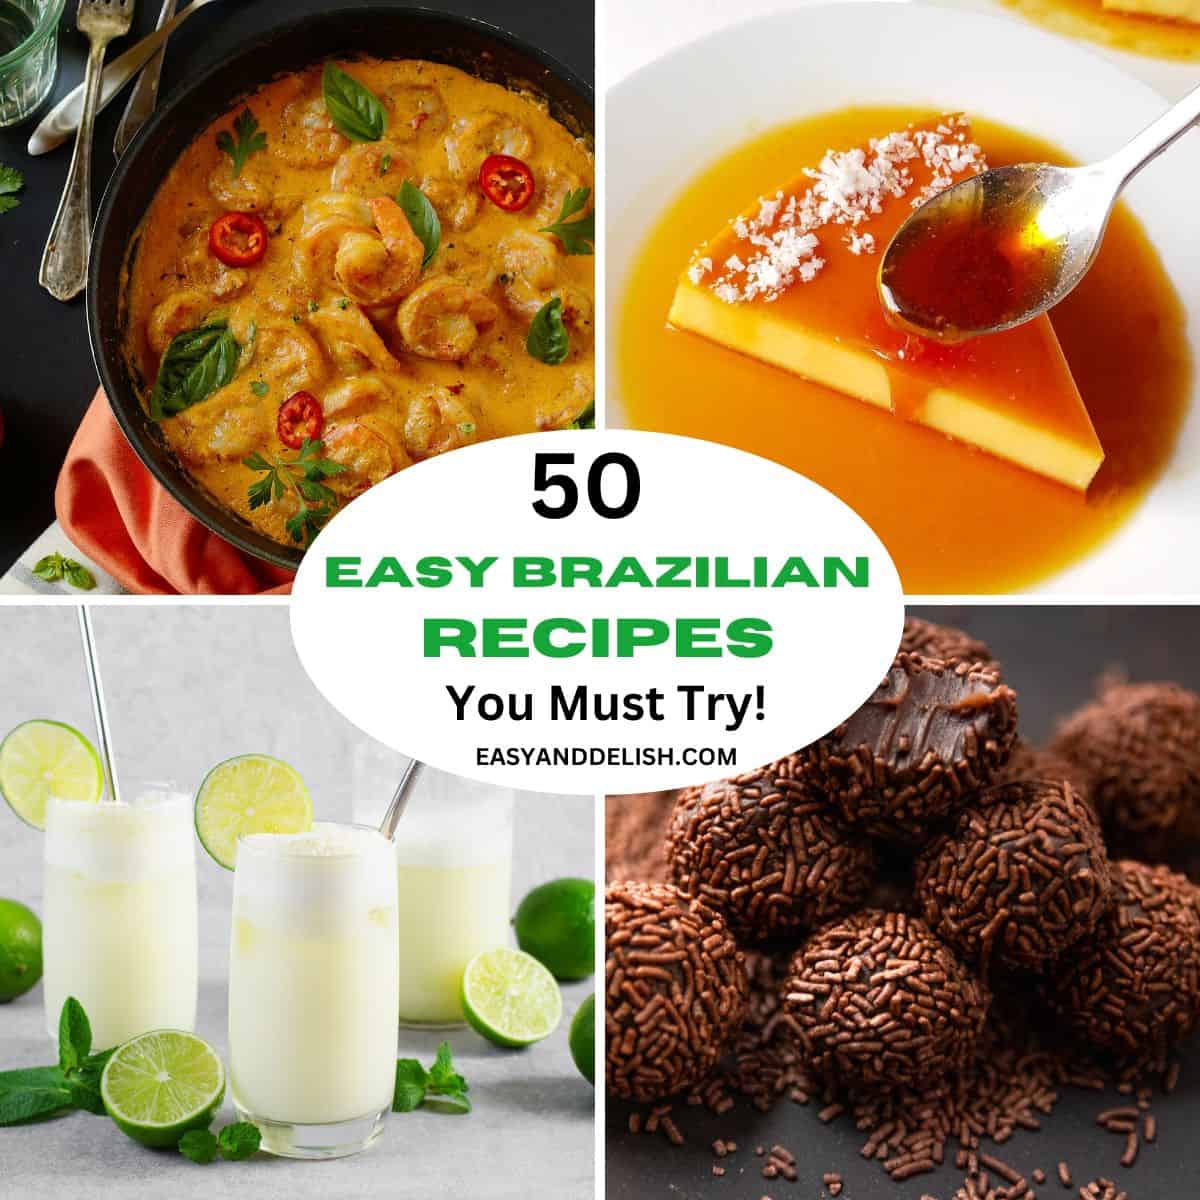 Brazilian Pastel - 3 Fillings - Olivia's Cuisine